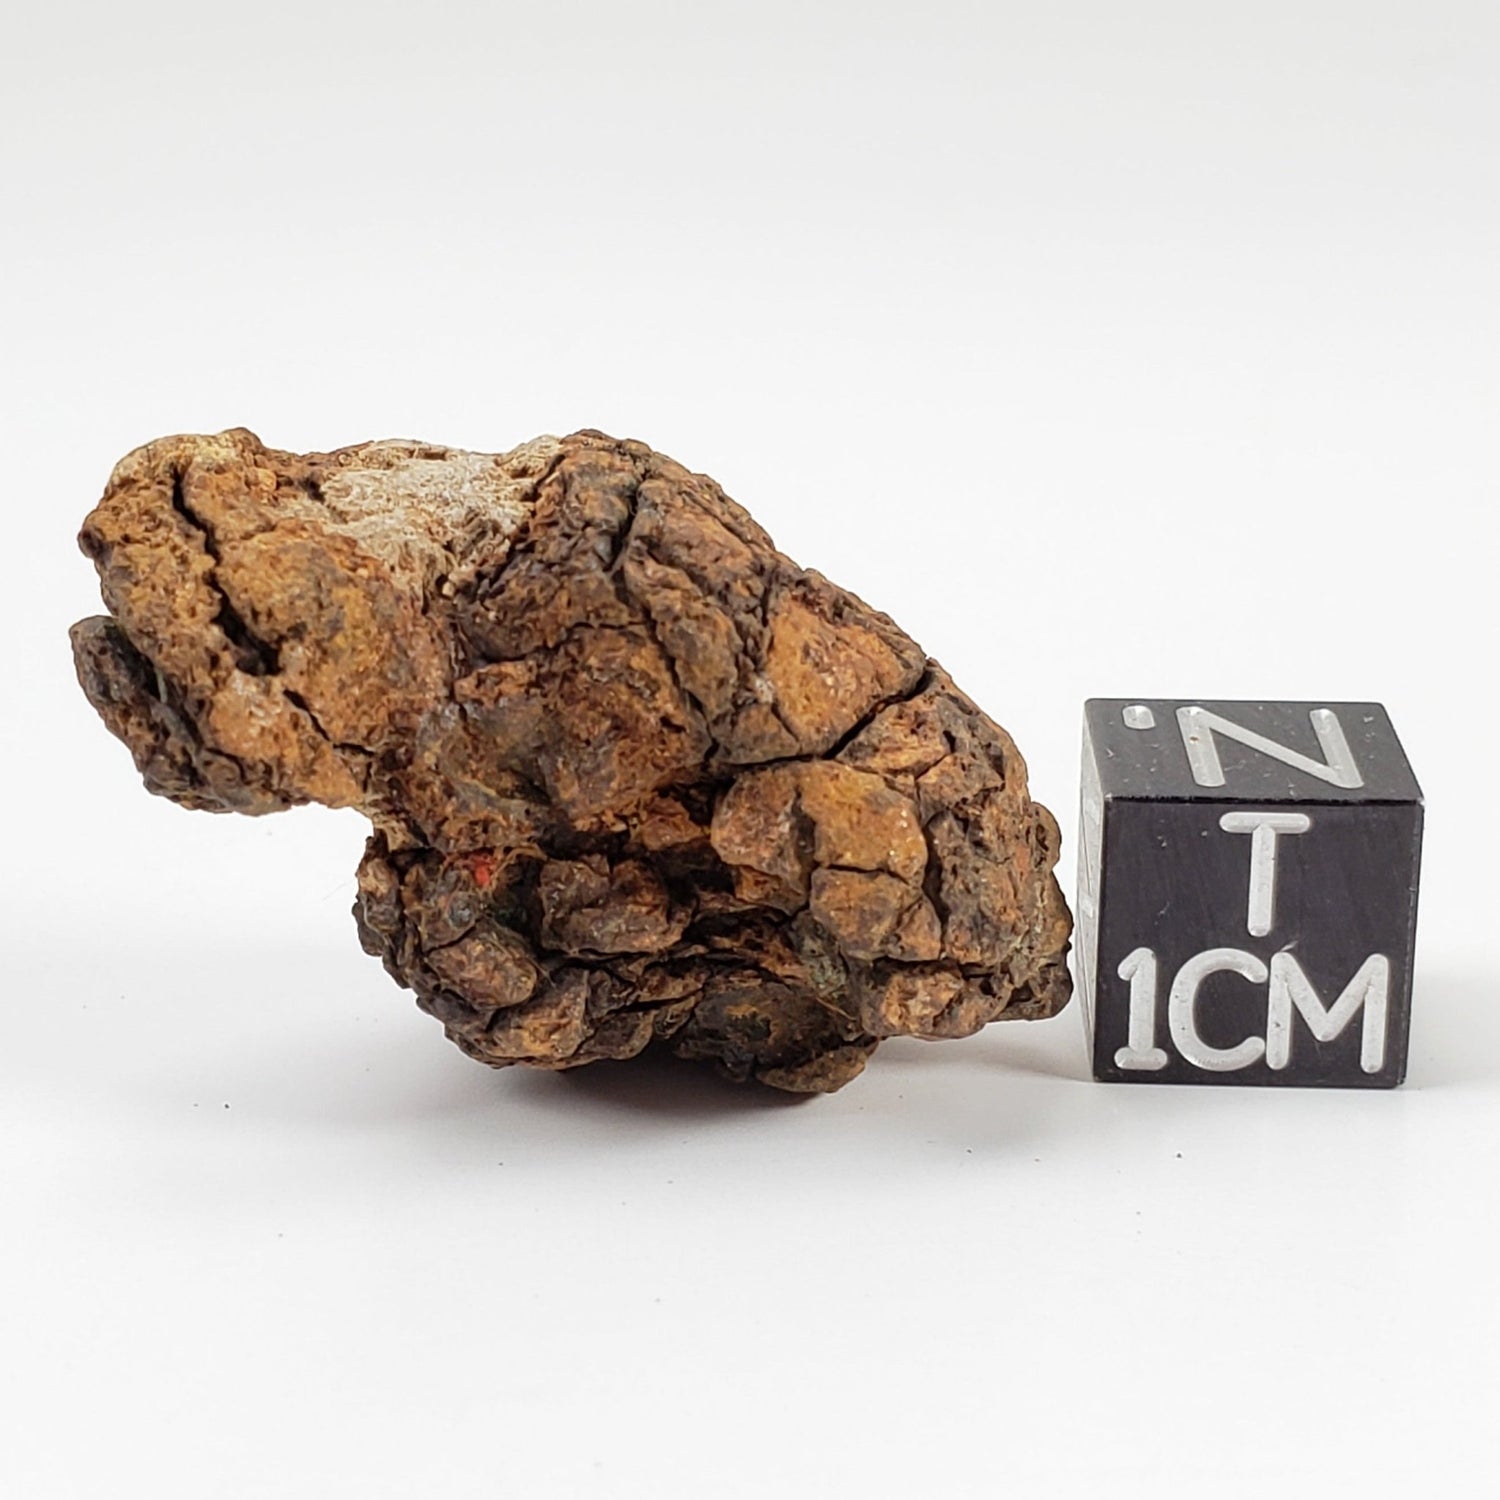 Sericho Meteorite | 13.8 Grams | As found Individual | MG Pallasite | Kenya Africa